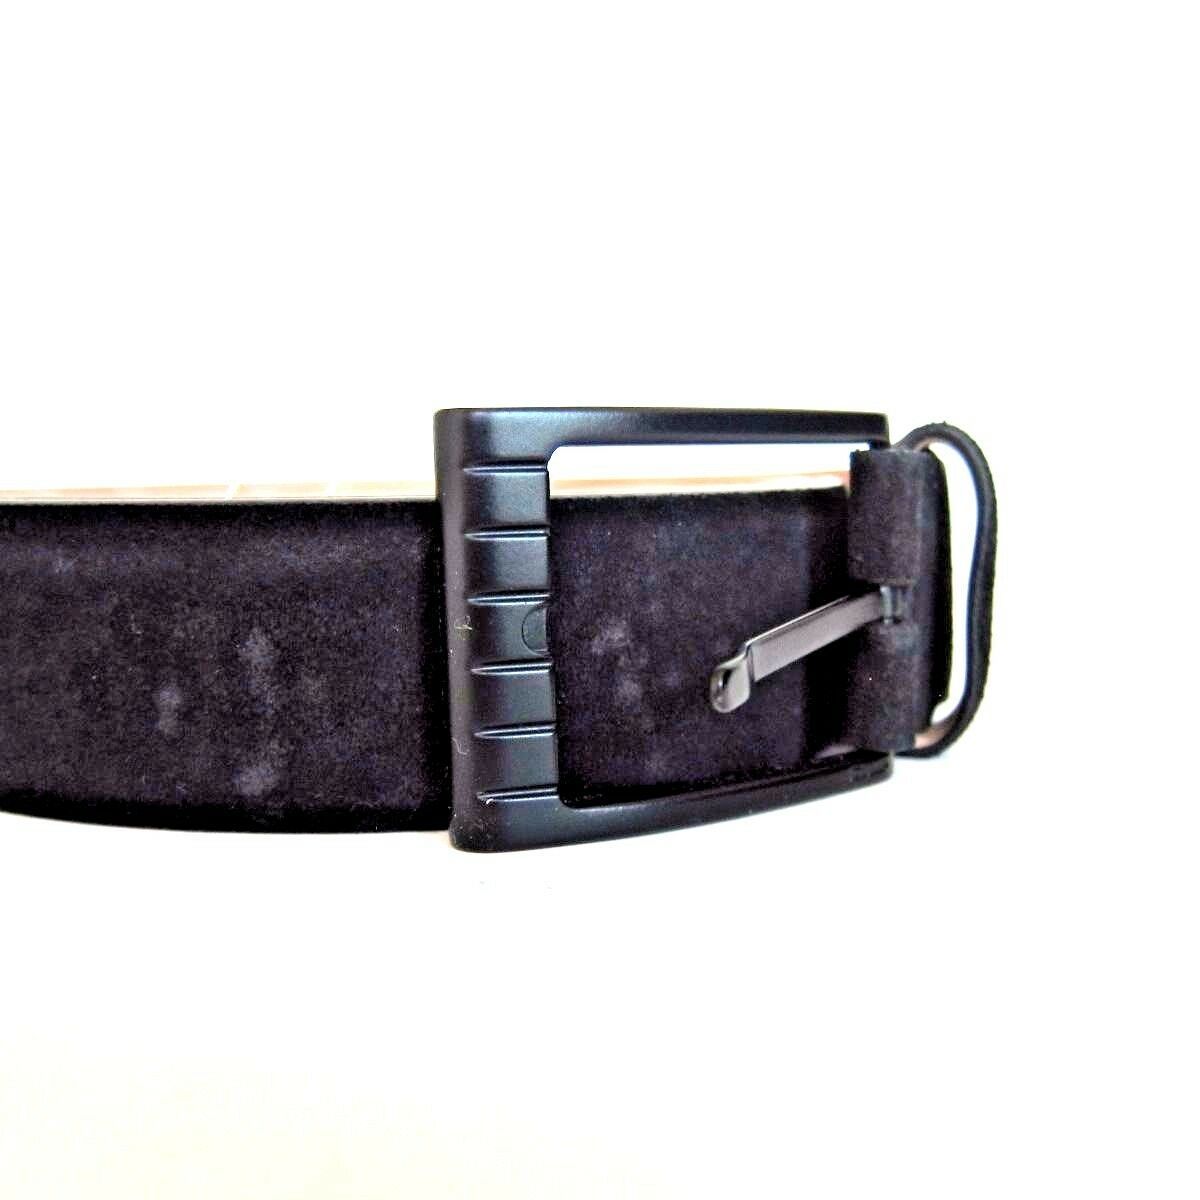 S-1852116 New Salvatore Ferragamo Black Suede Belt Size 34 Fits Waist 32 - Belts